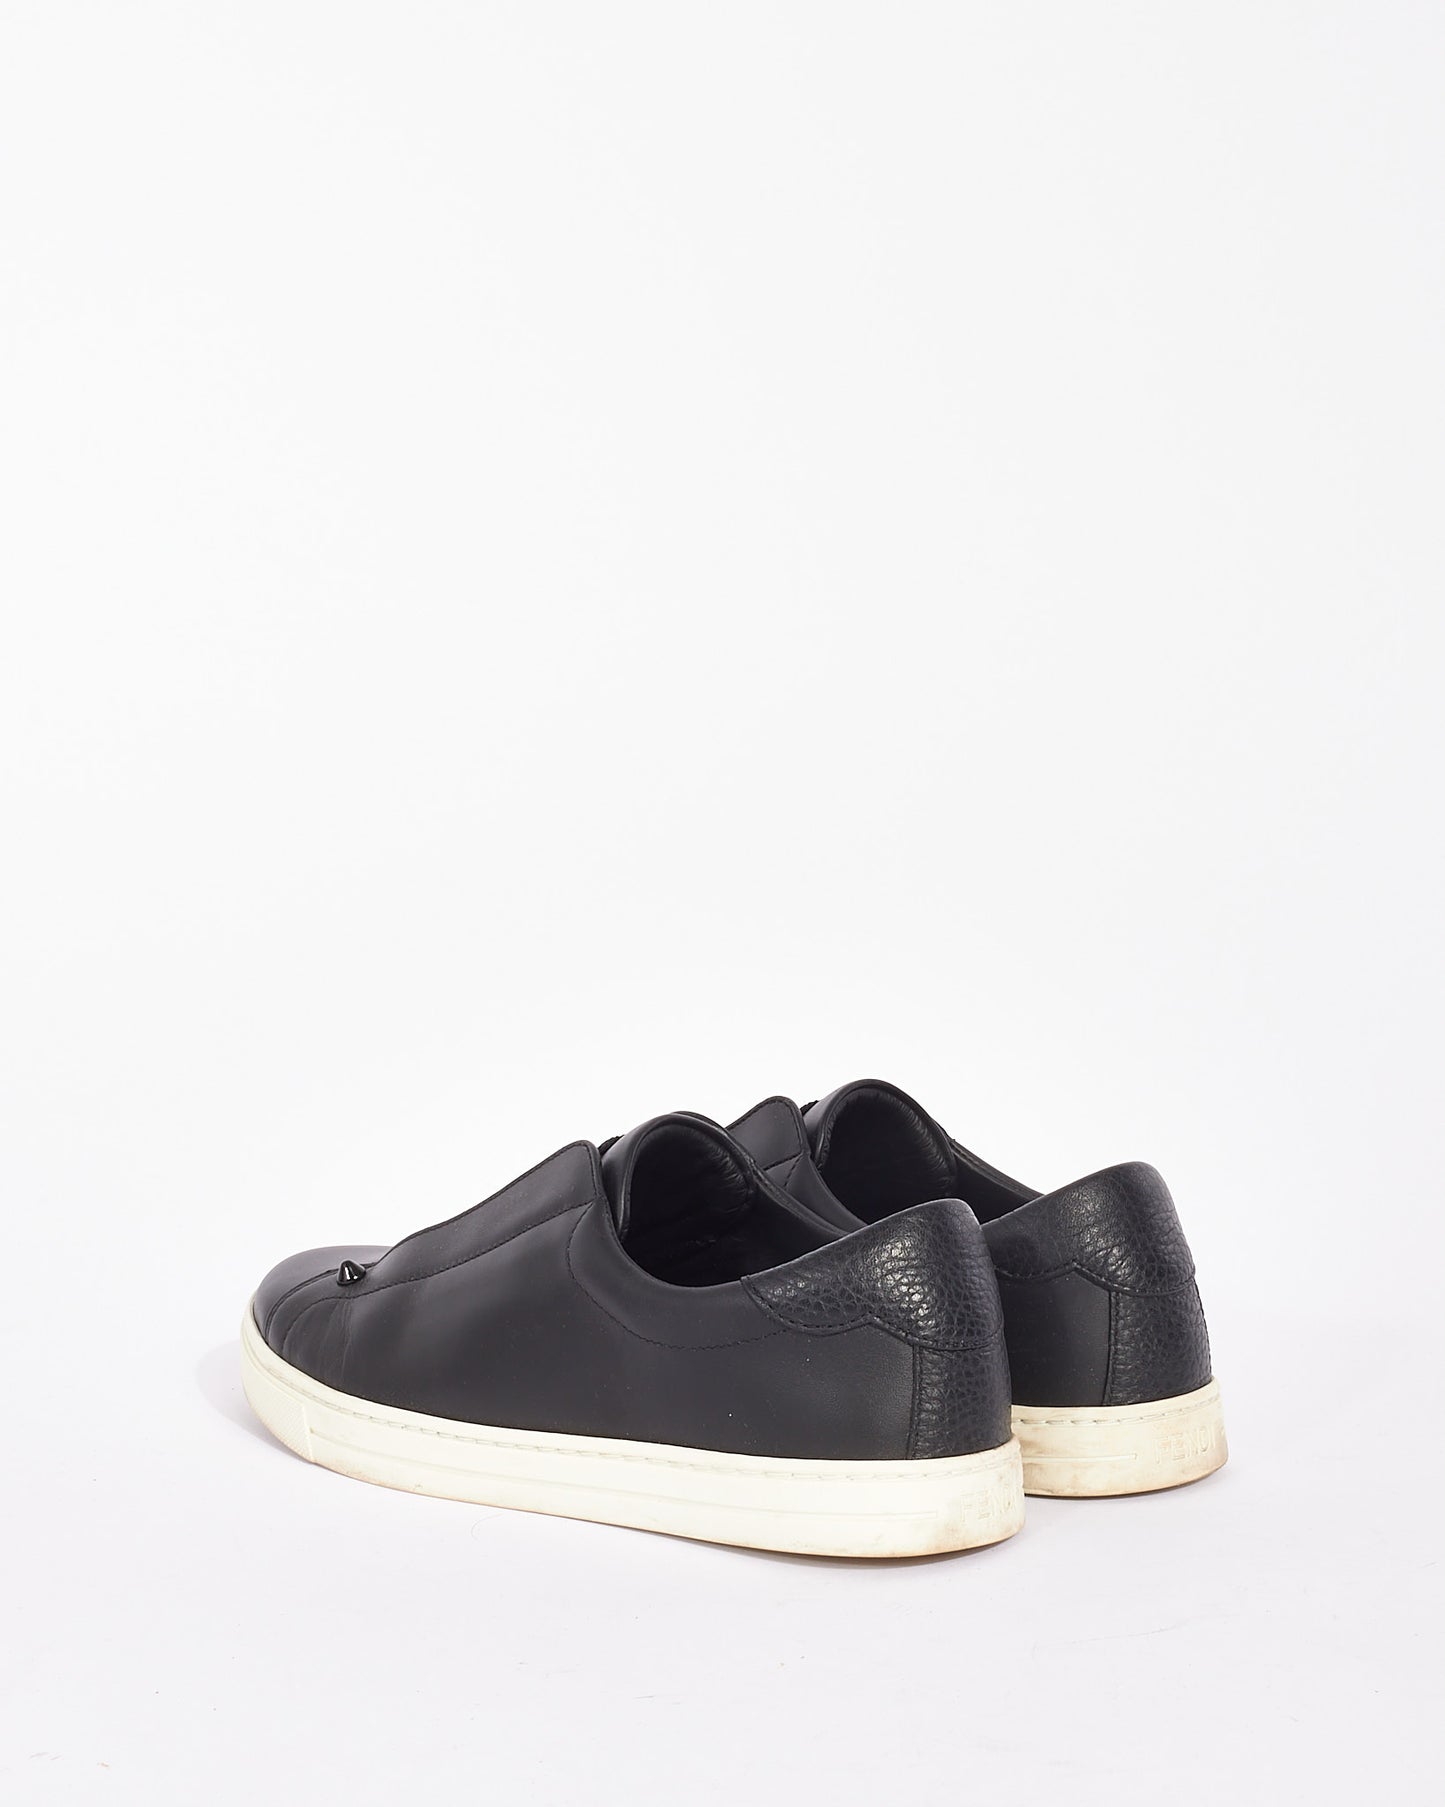 Fendi Black Leather Zucca Rockoclick Slip On Sneakers - 37